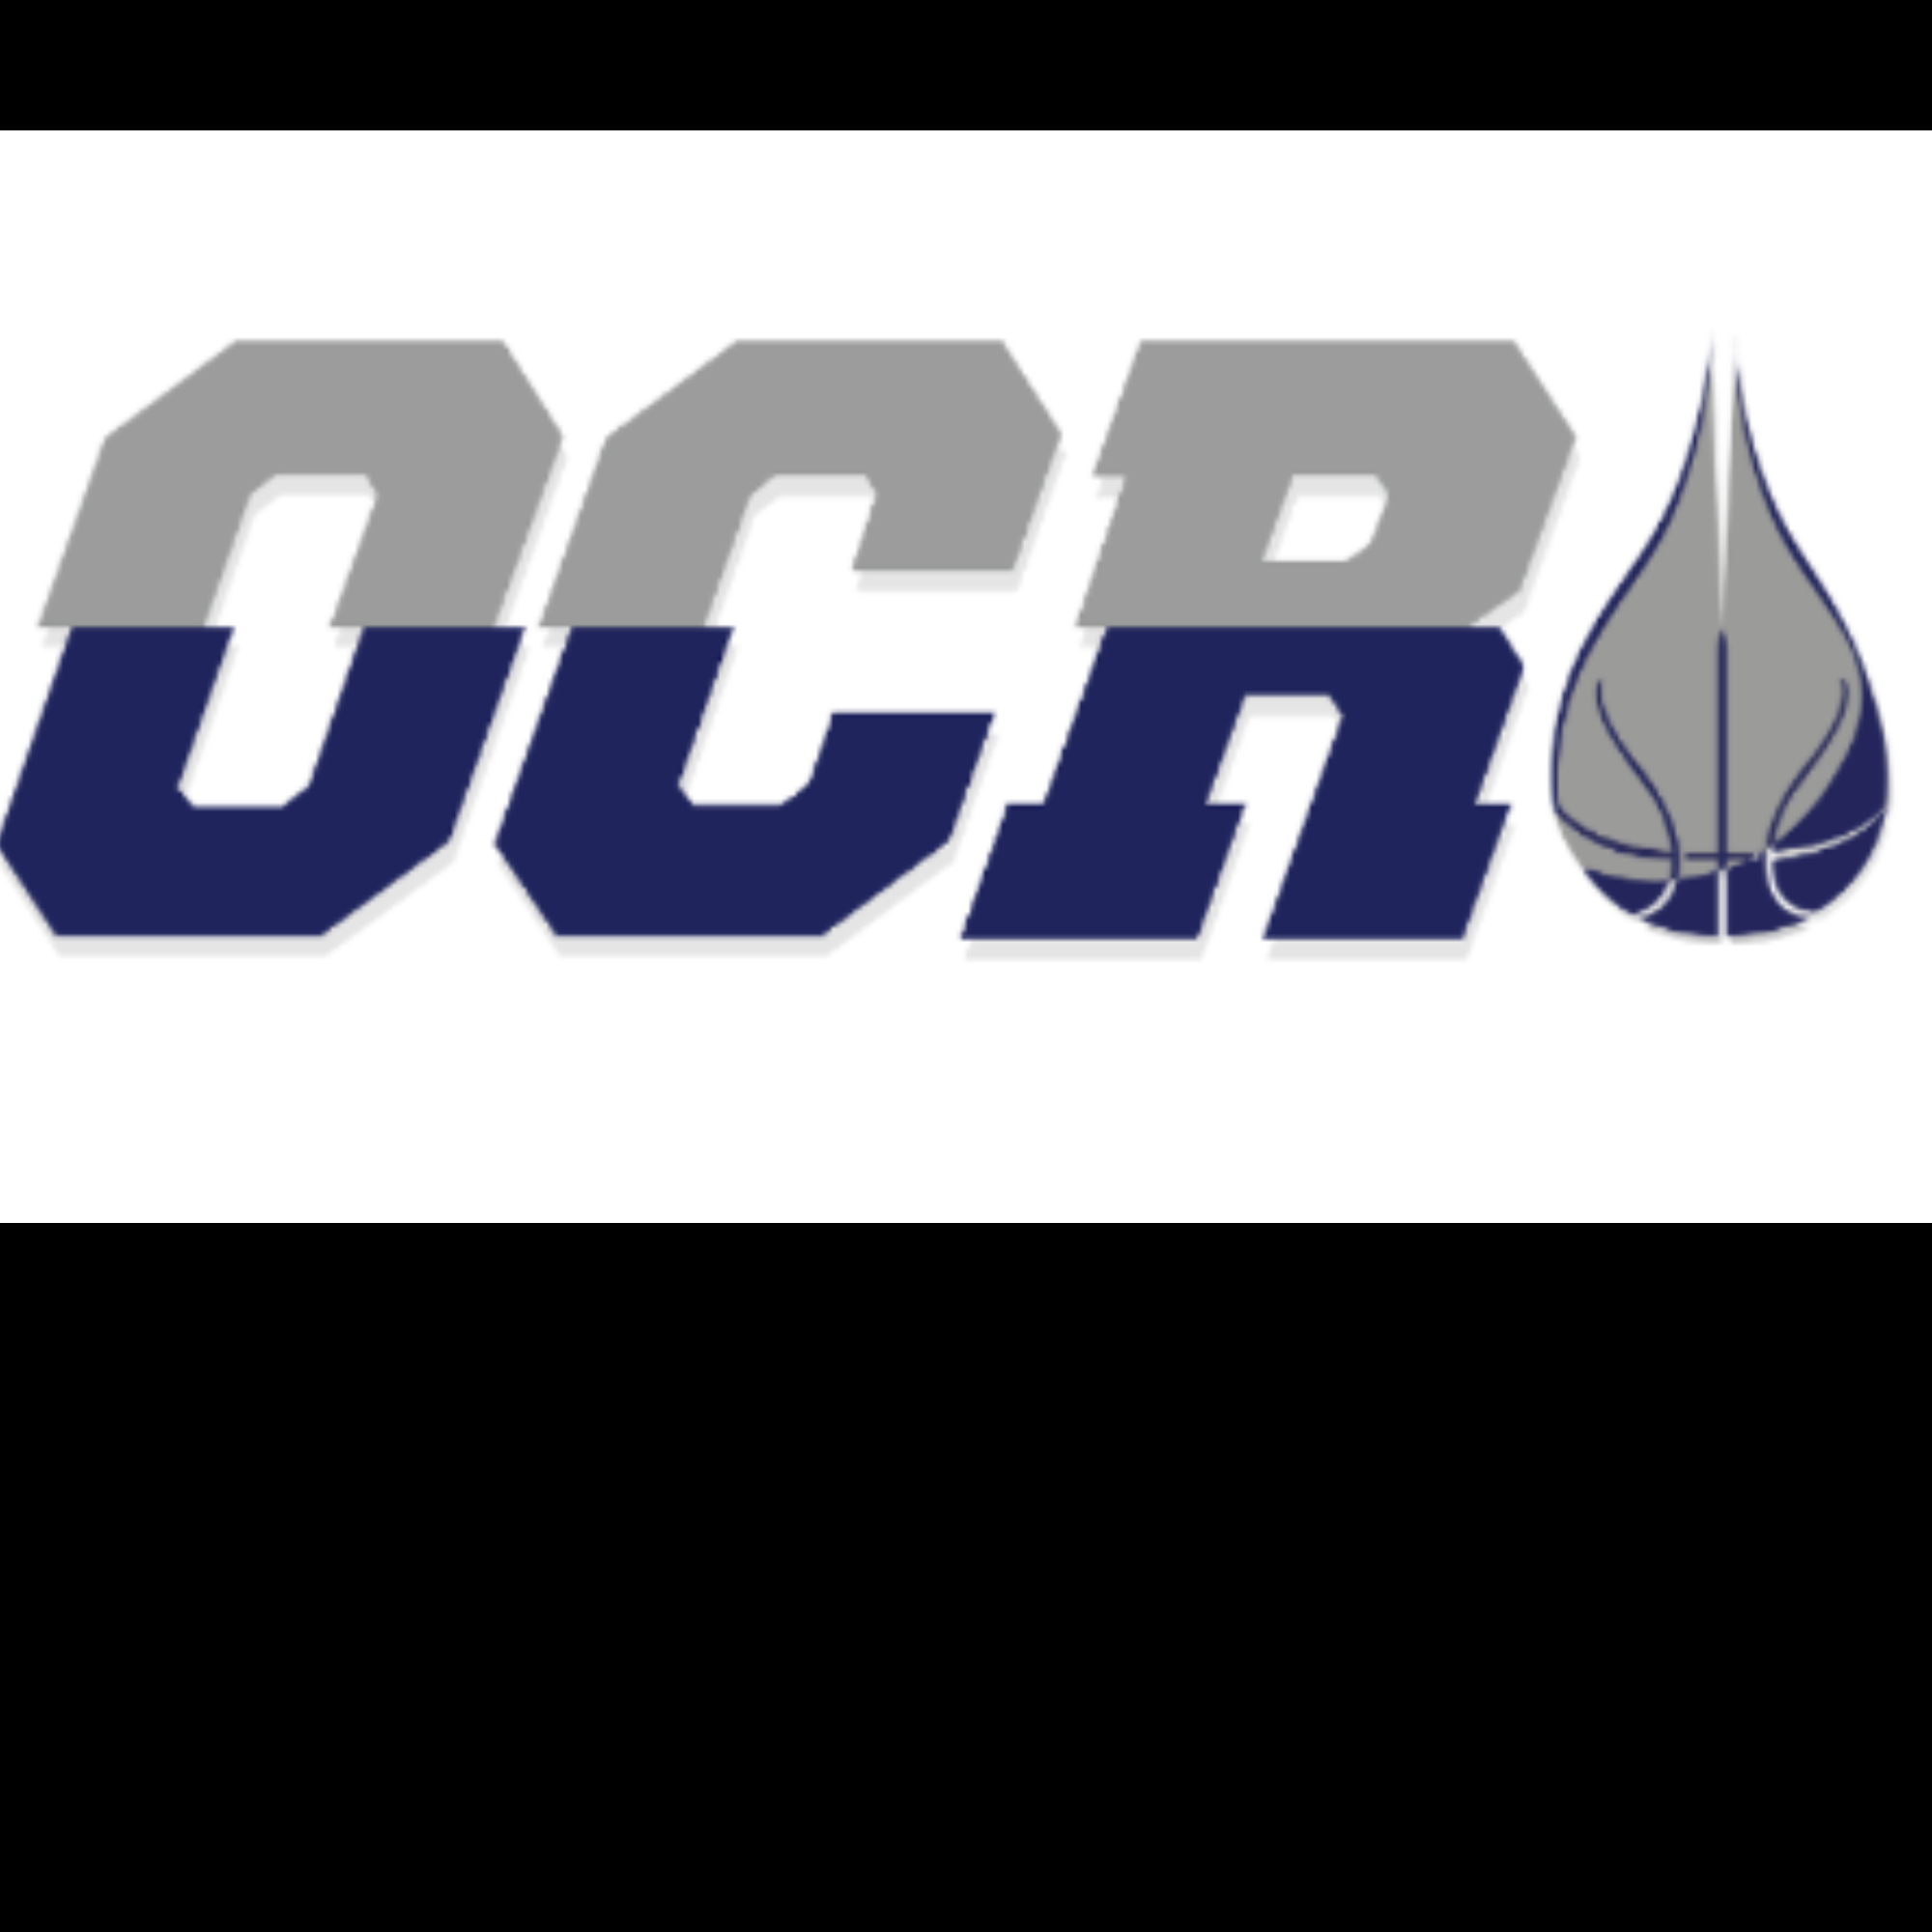 The official logo of OC Rain